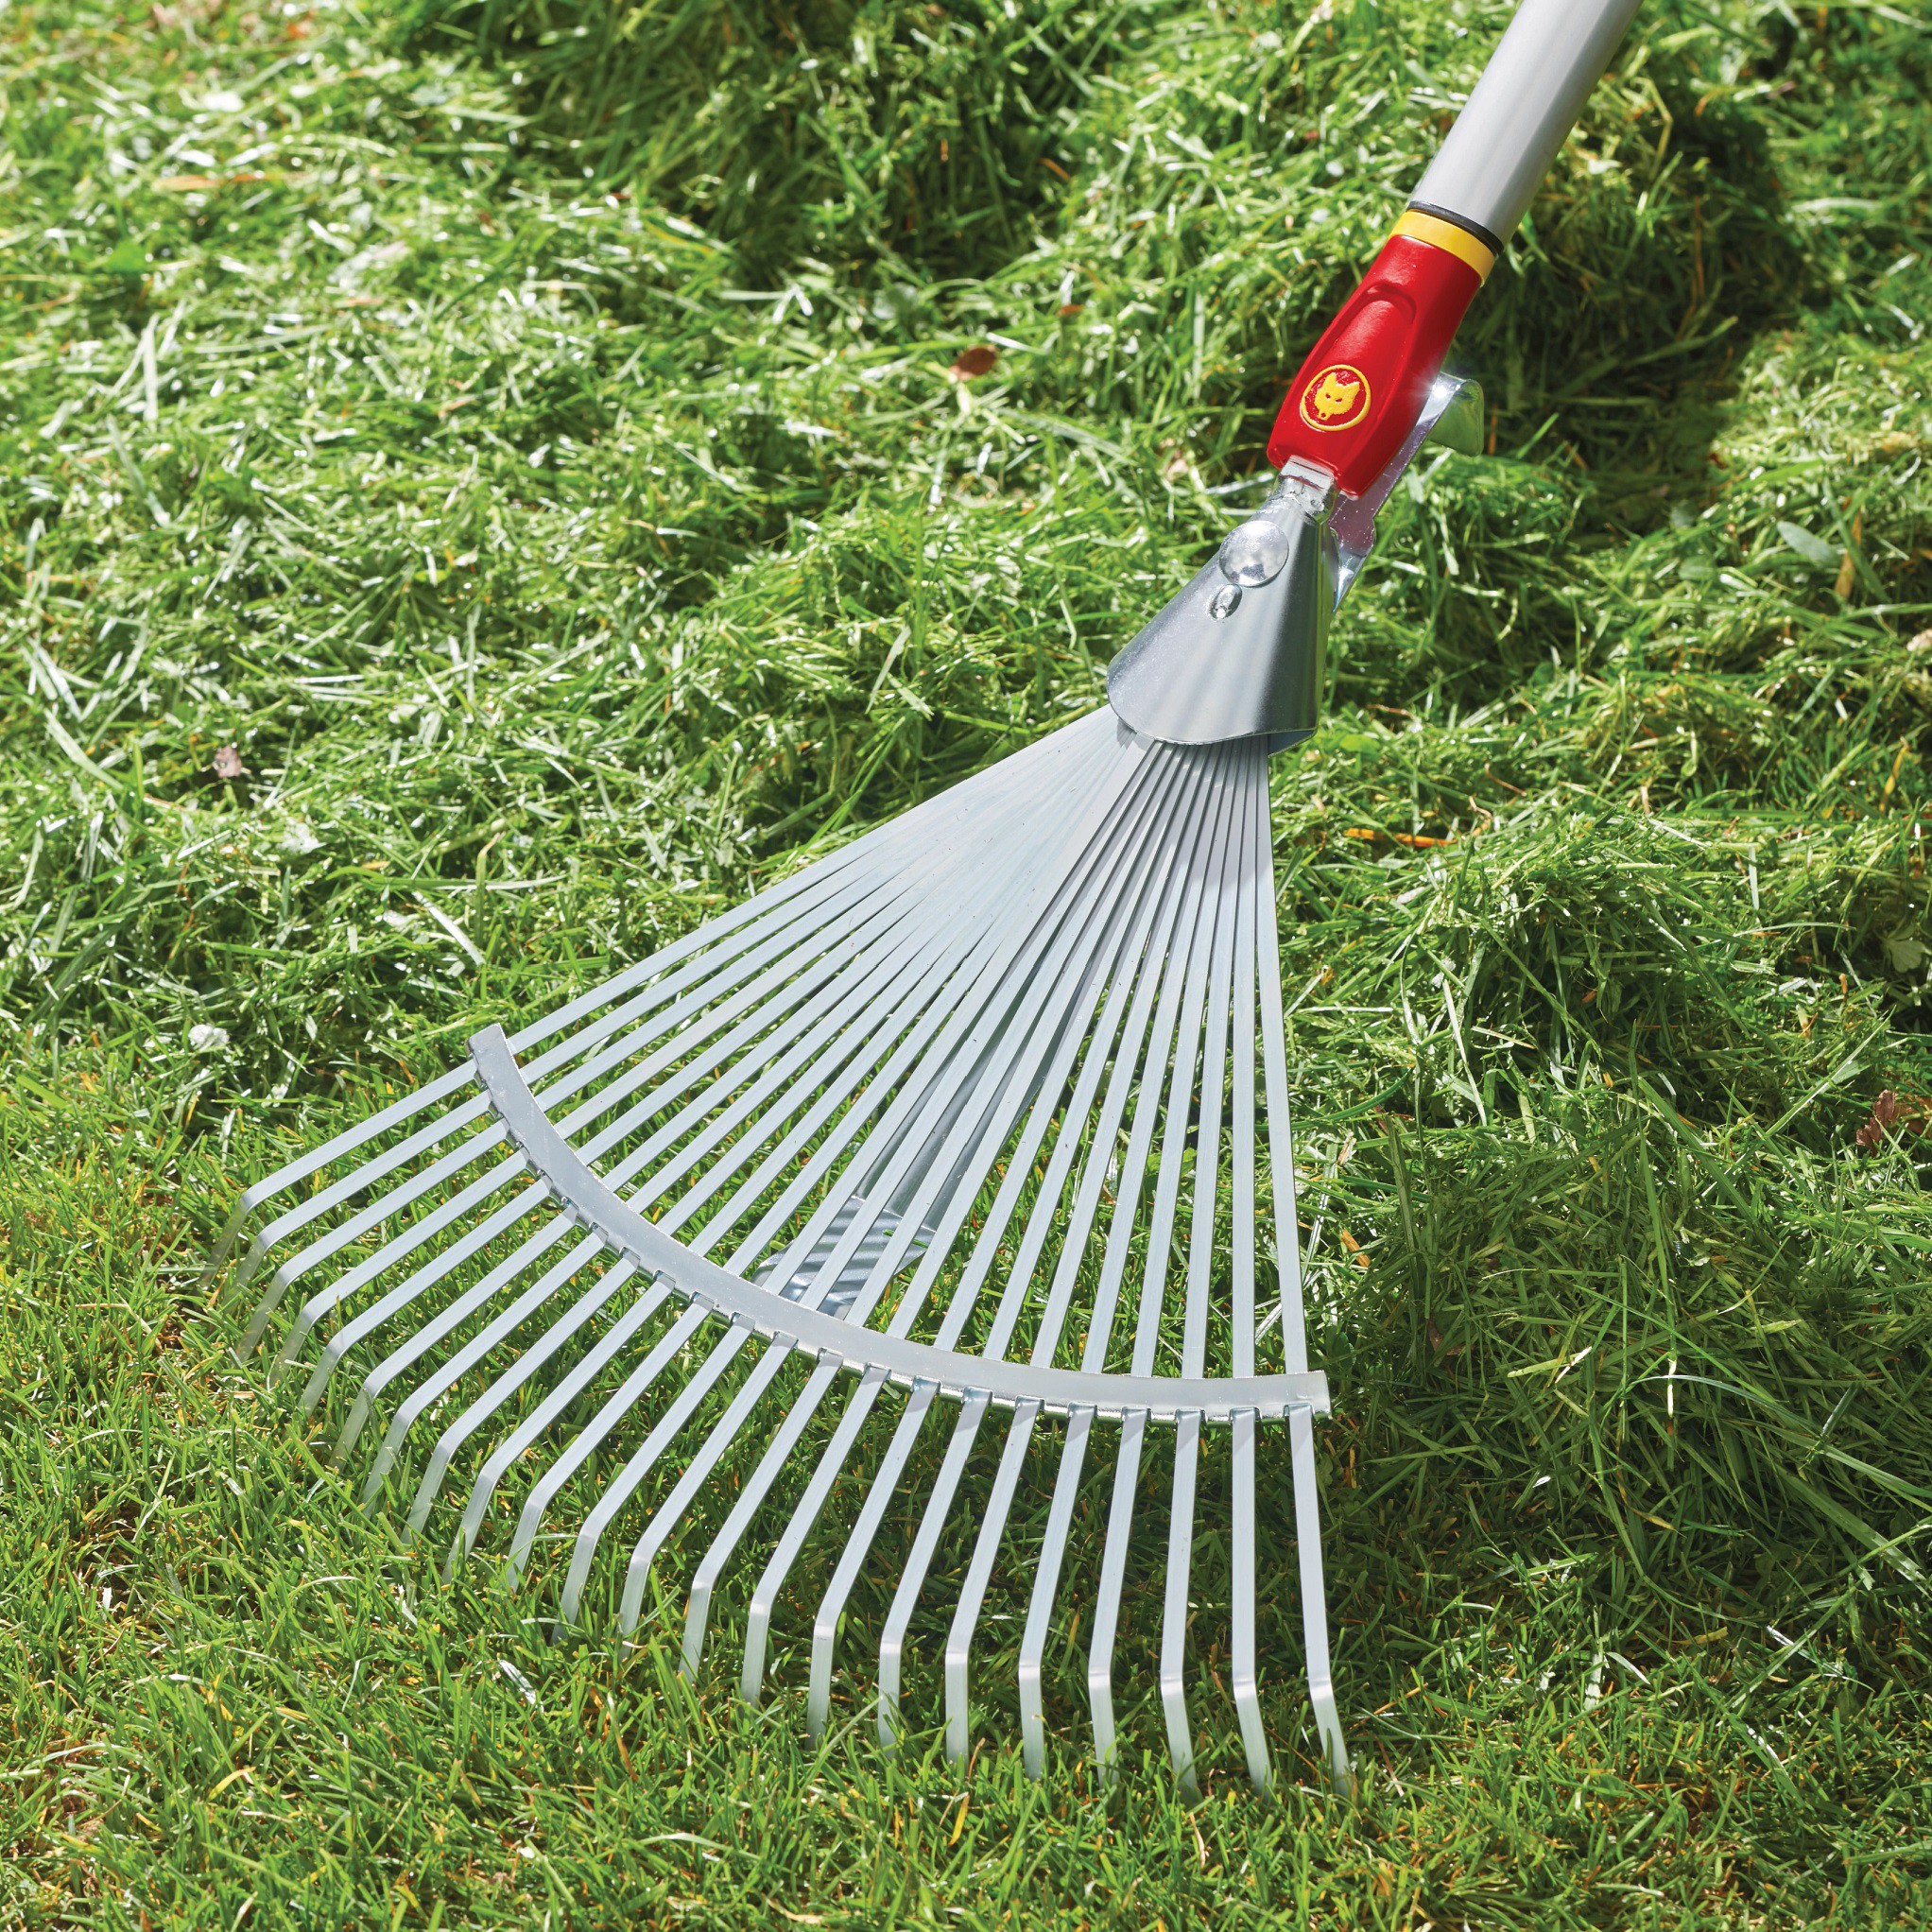 Image of Flail rake garden tool